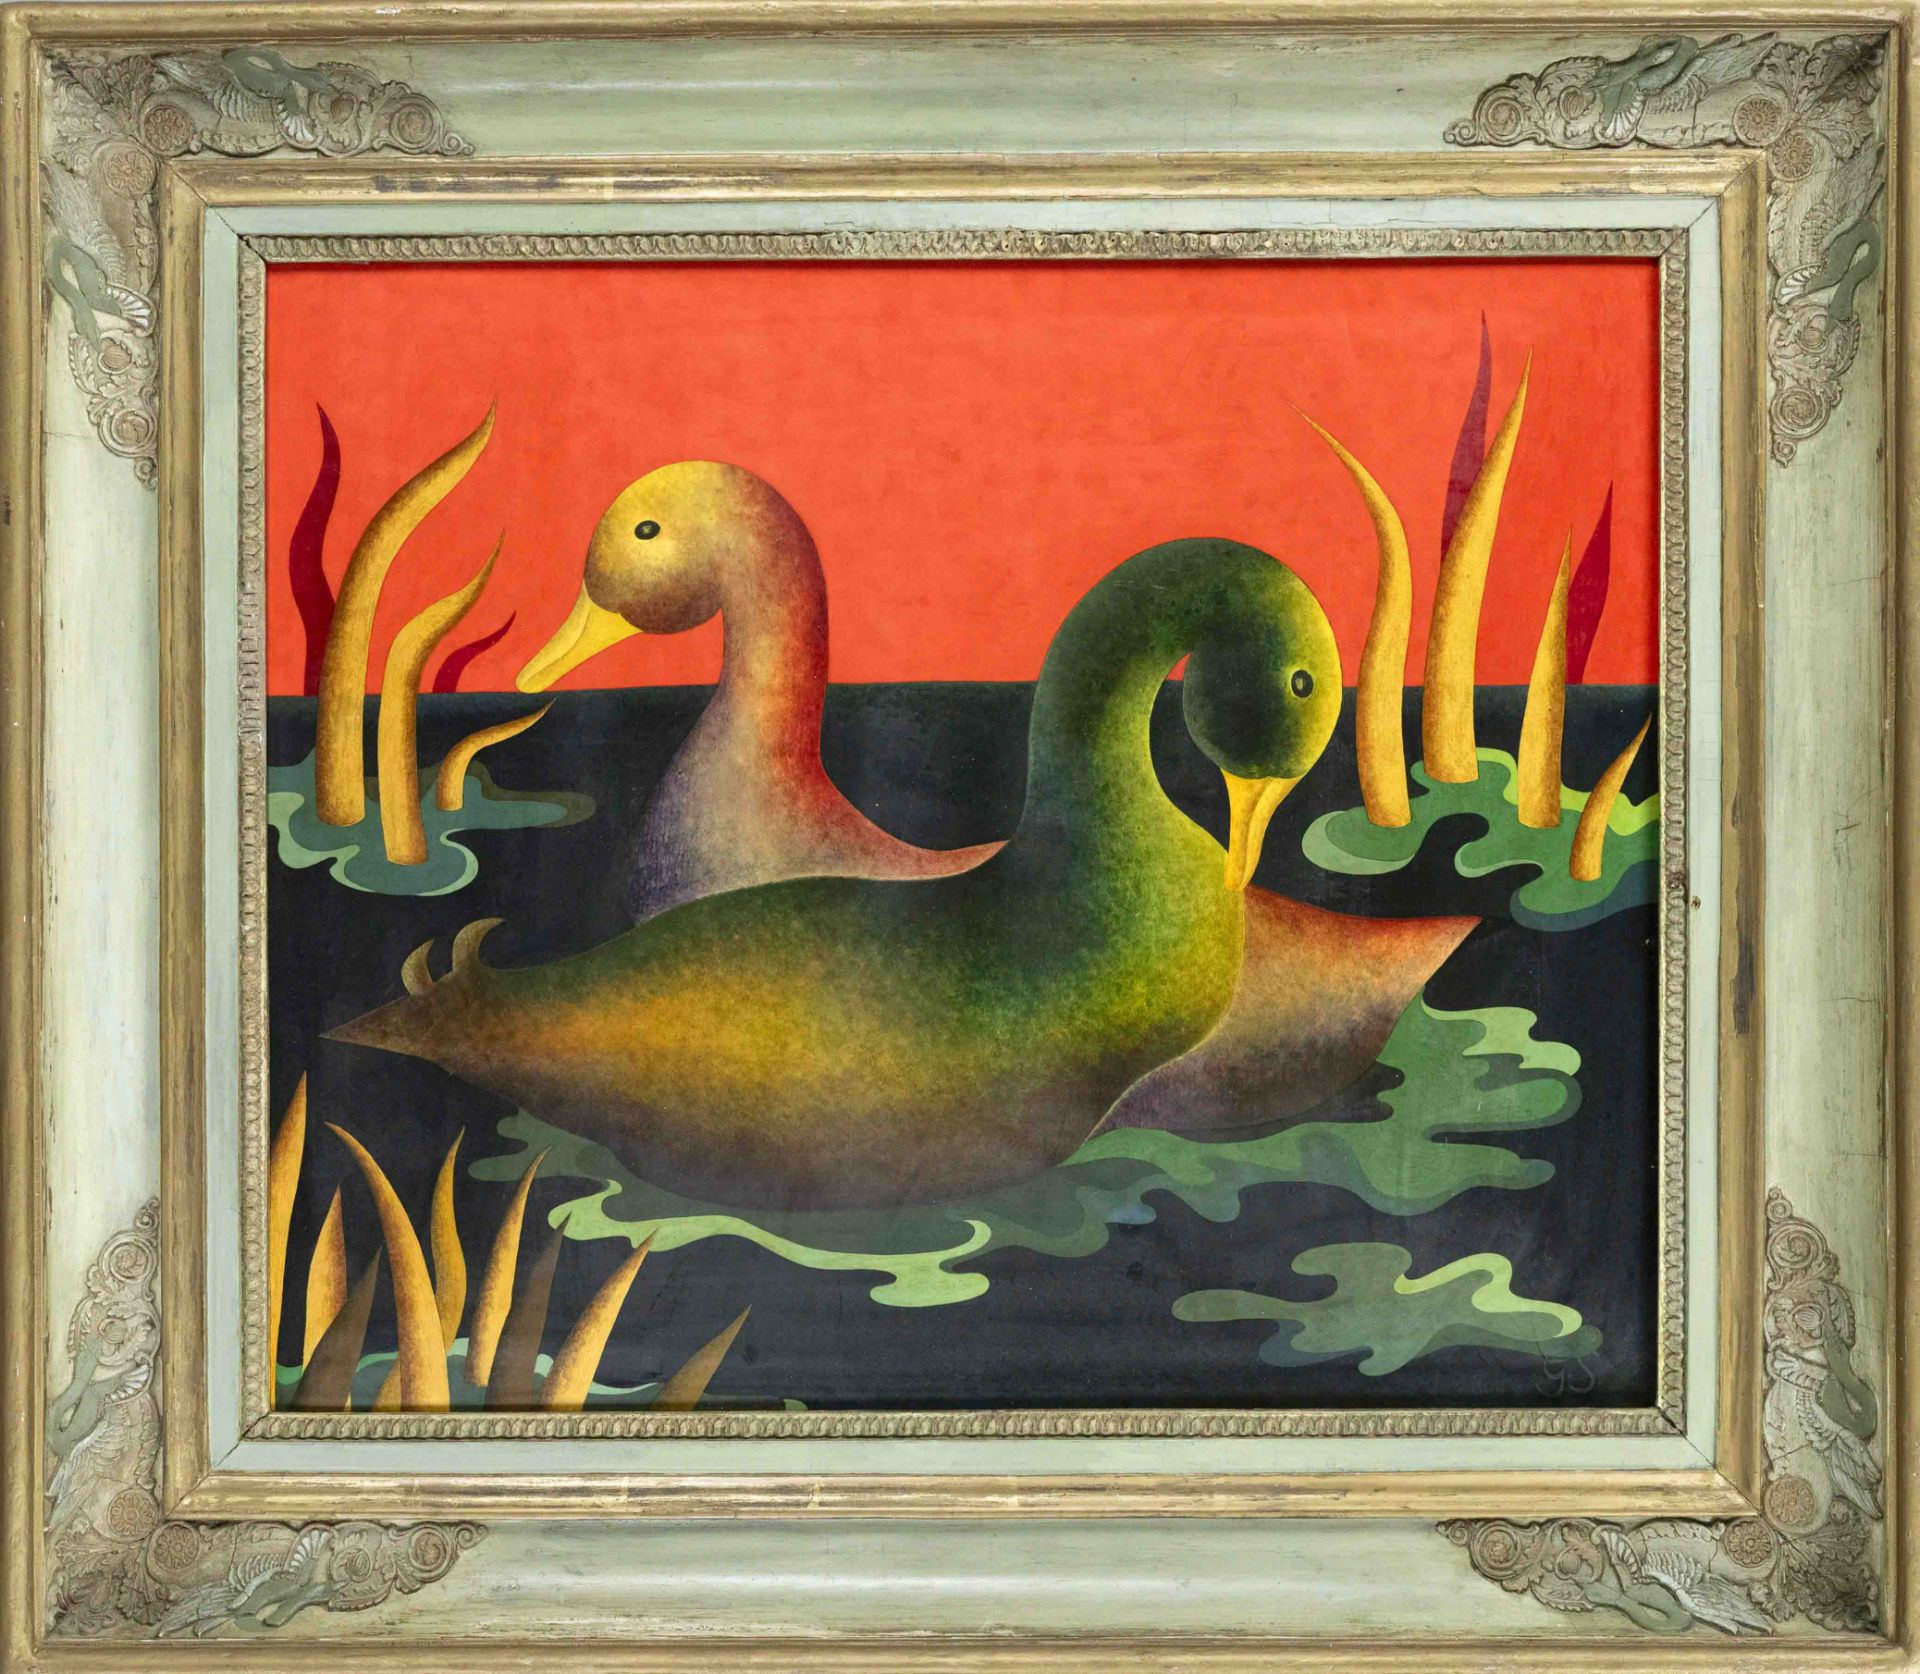 Gisela Sedatis-Grosser (1935-2007), Berlin painter, Pond landscape with ducks, lacquer painting on